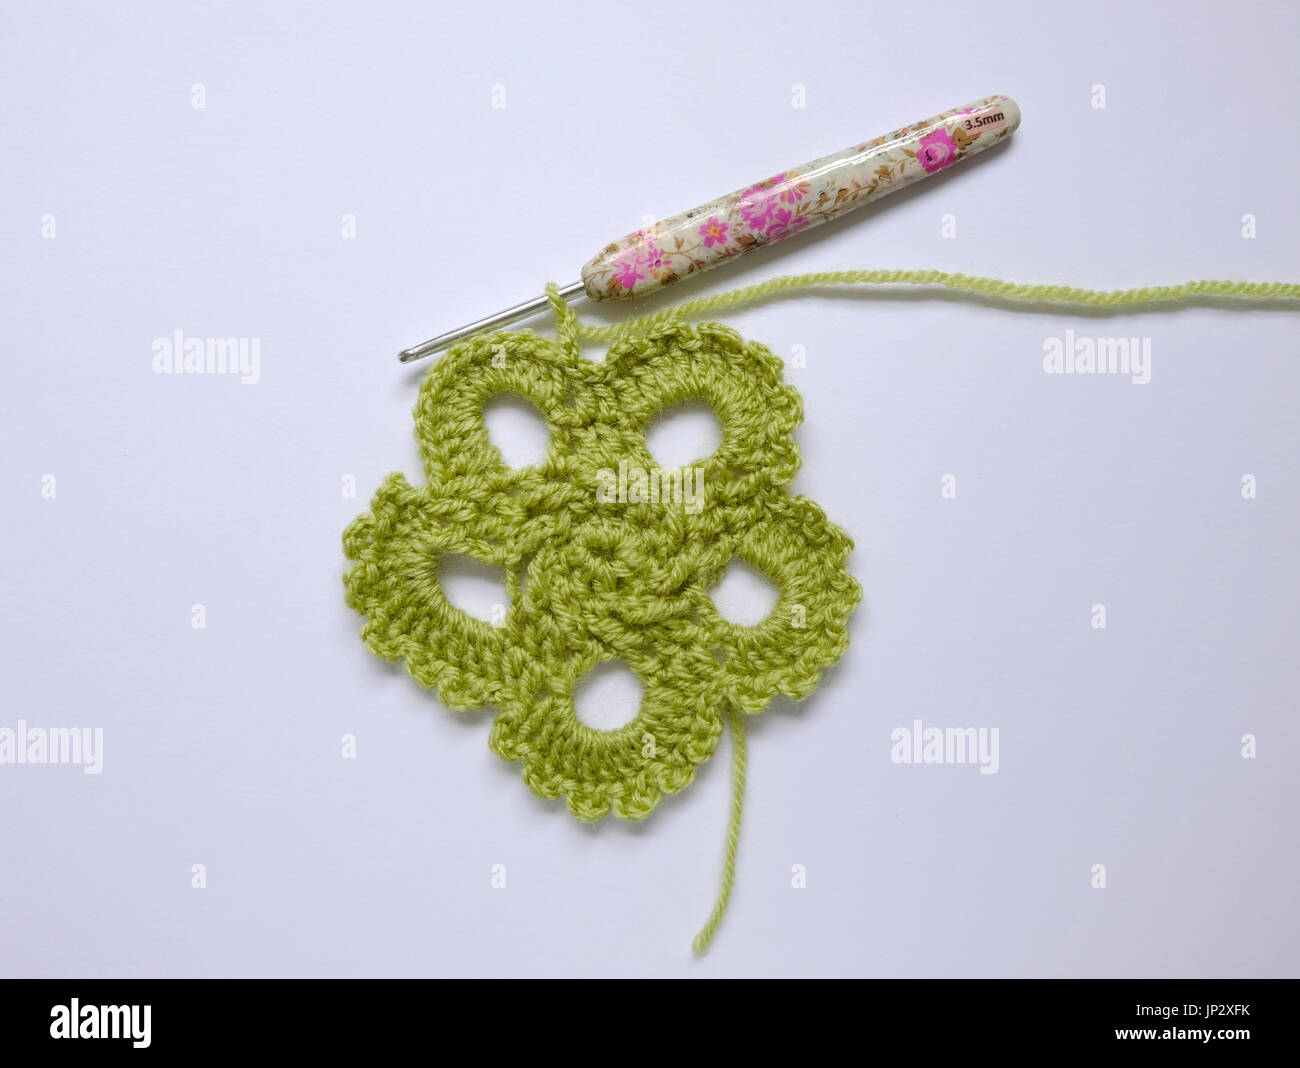 Work in progress on a green crocheted motif Stock Photo